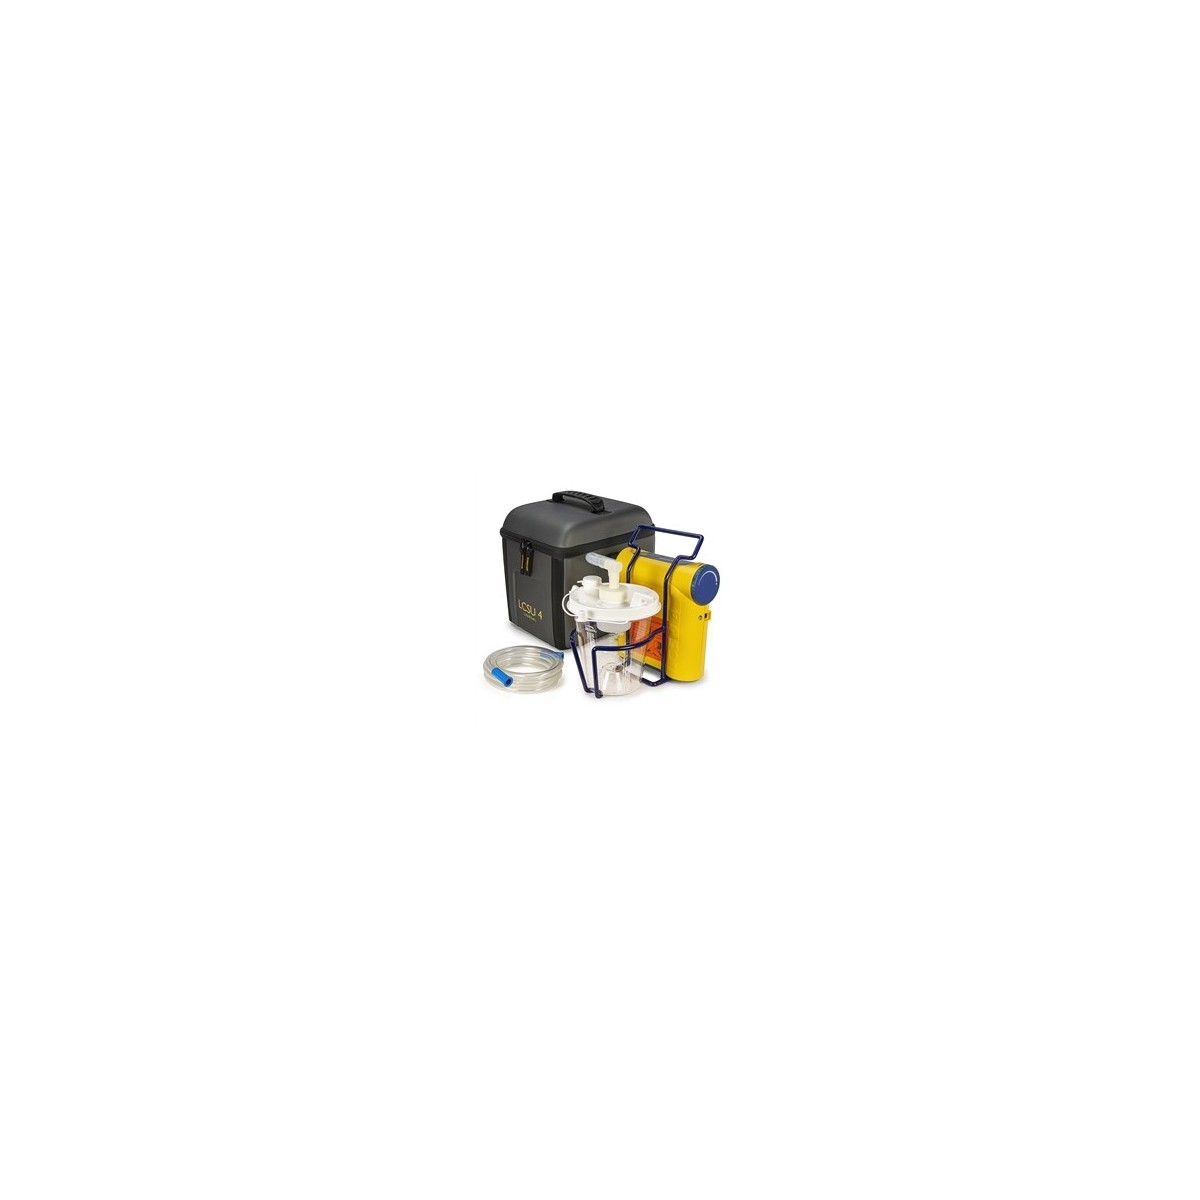 Laerdal Compact Suction Unit LCSU 4 (800ml) RTCA Certified